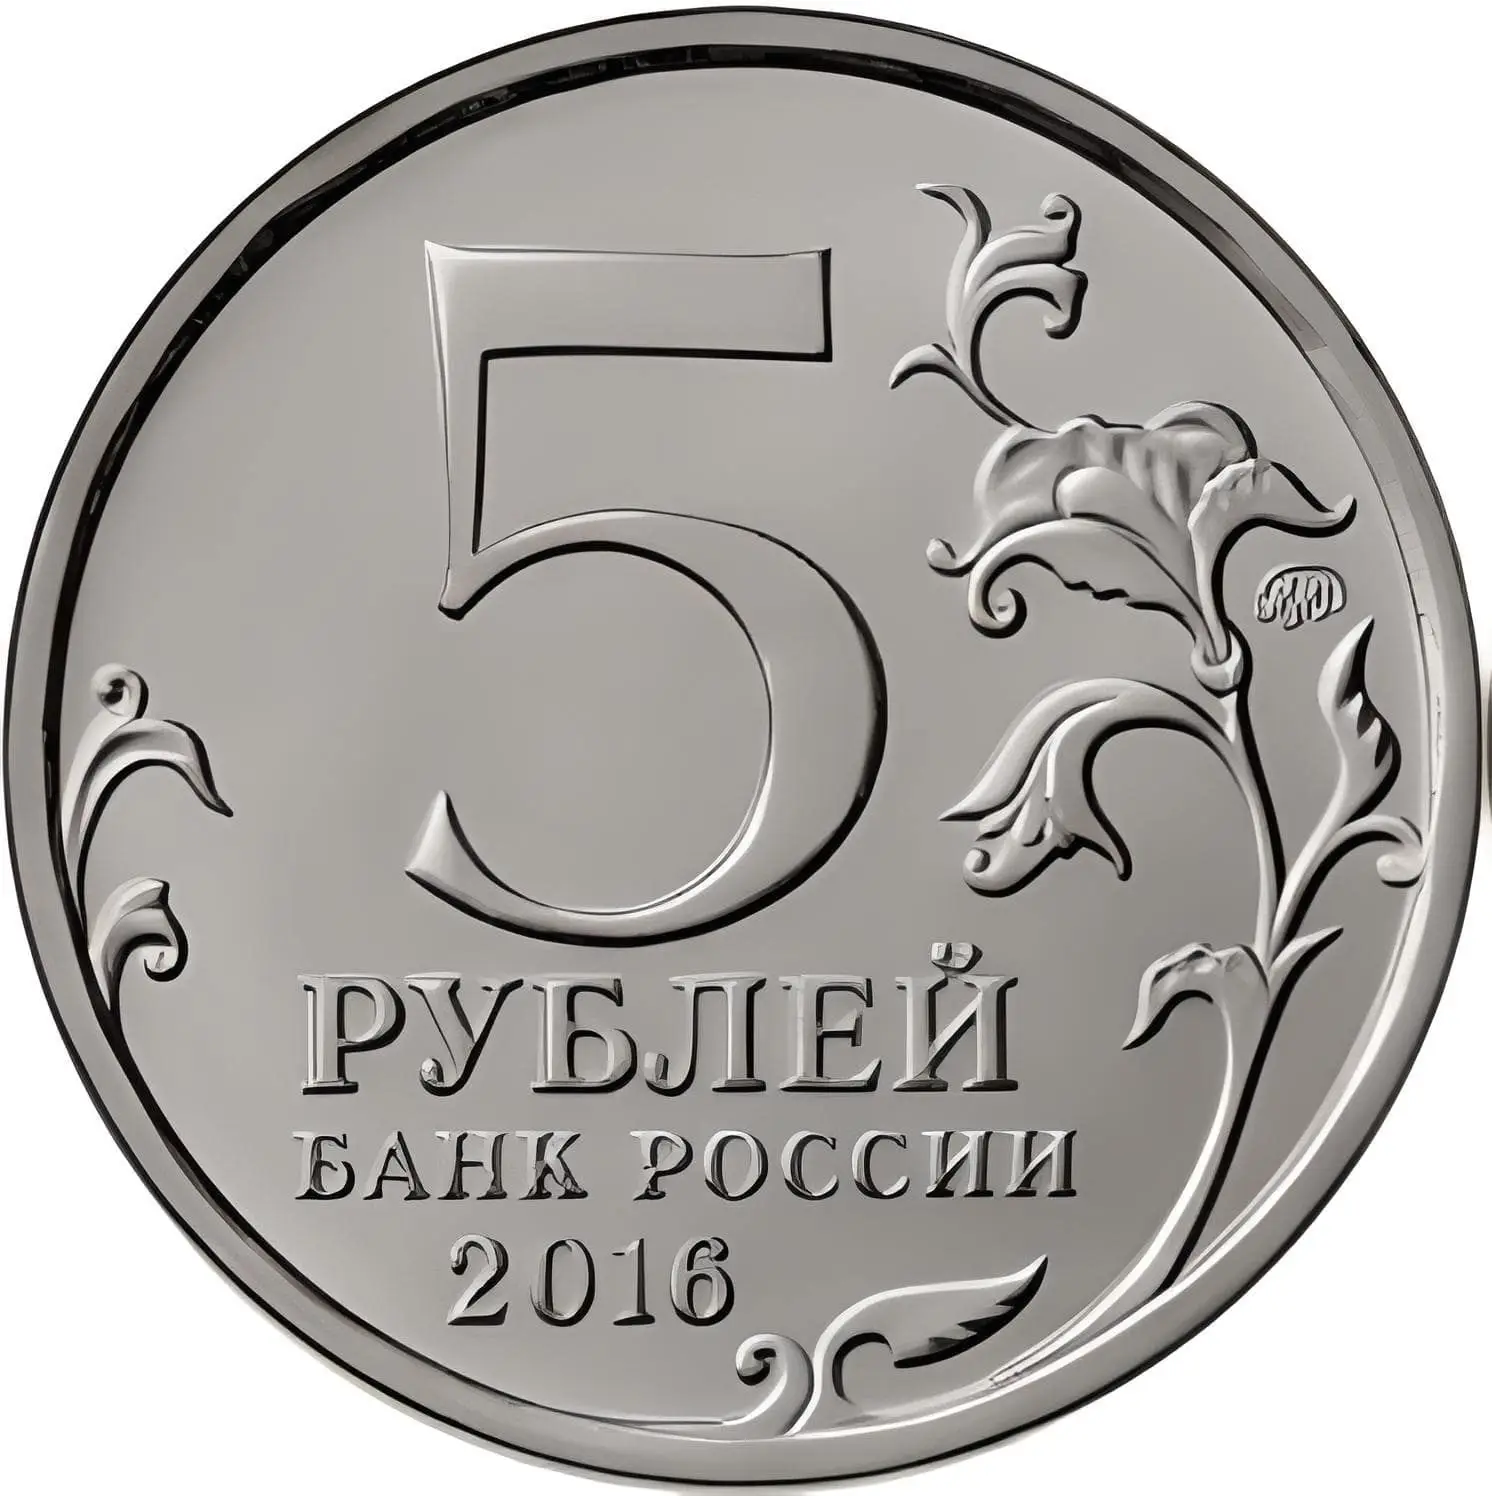 5 рублей плюс 5 рублей. Монета 5 рублей. Изображение 5 рублей. Монета 2 рубля на прозрачном фоне. Монета 5 руб для фотошопа.